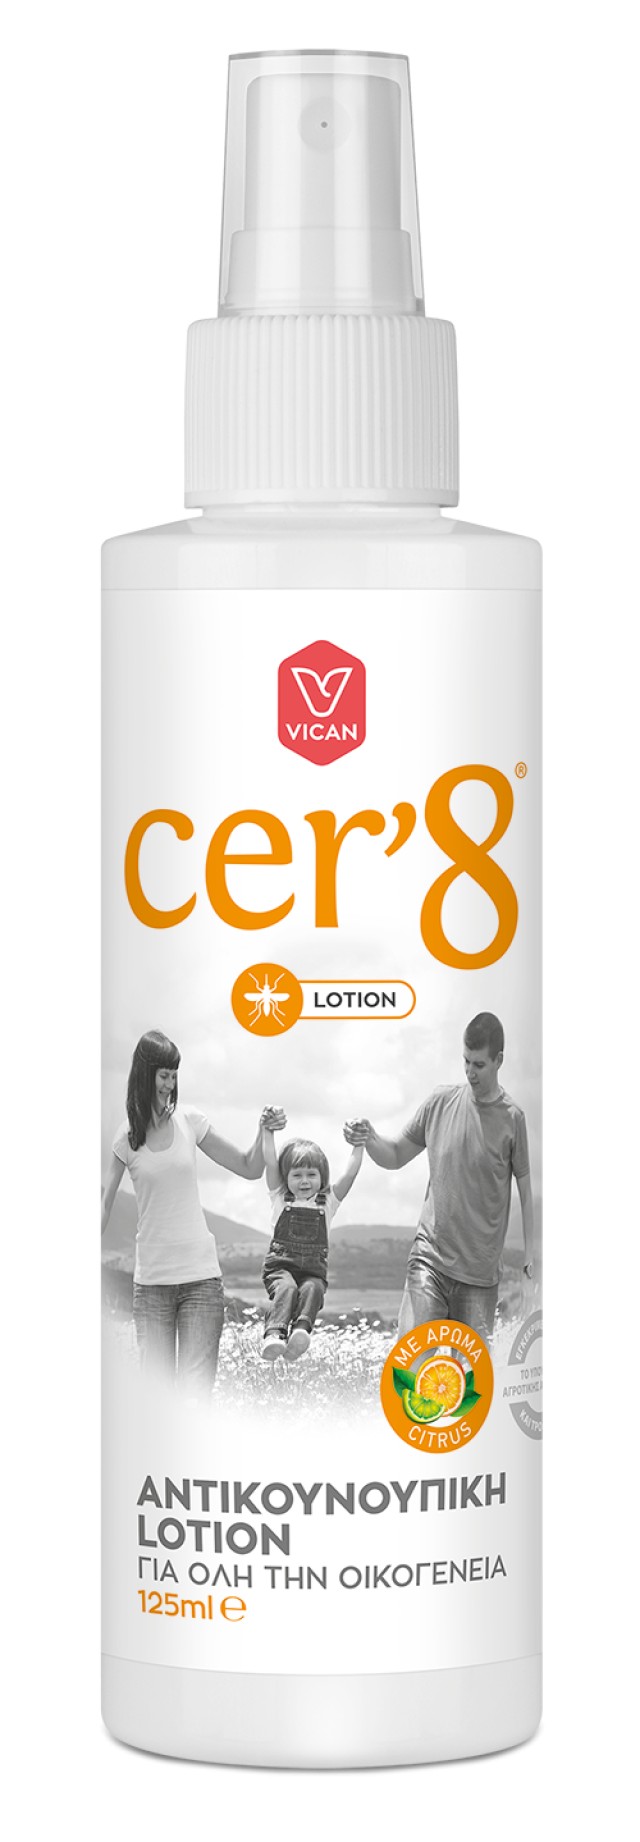 Vican Cer8 Lotion Αντικουνουπική Λοσιόν 125ml